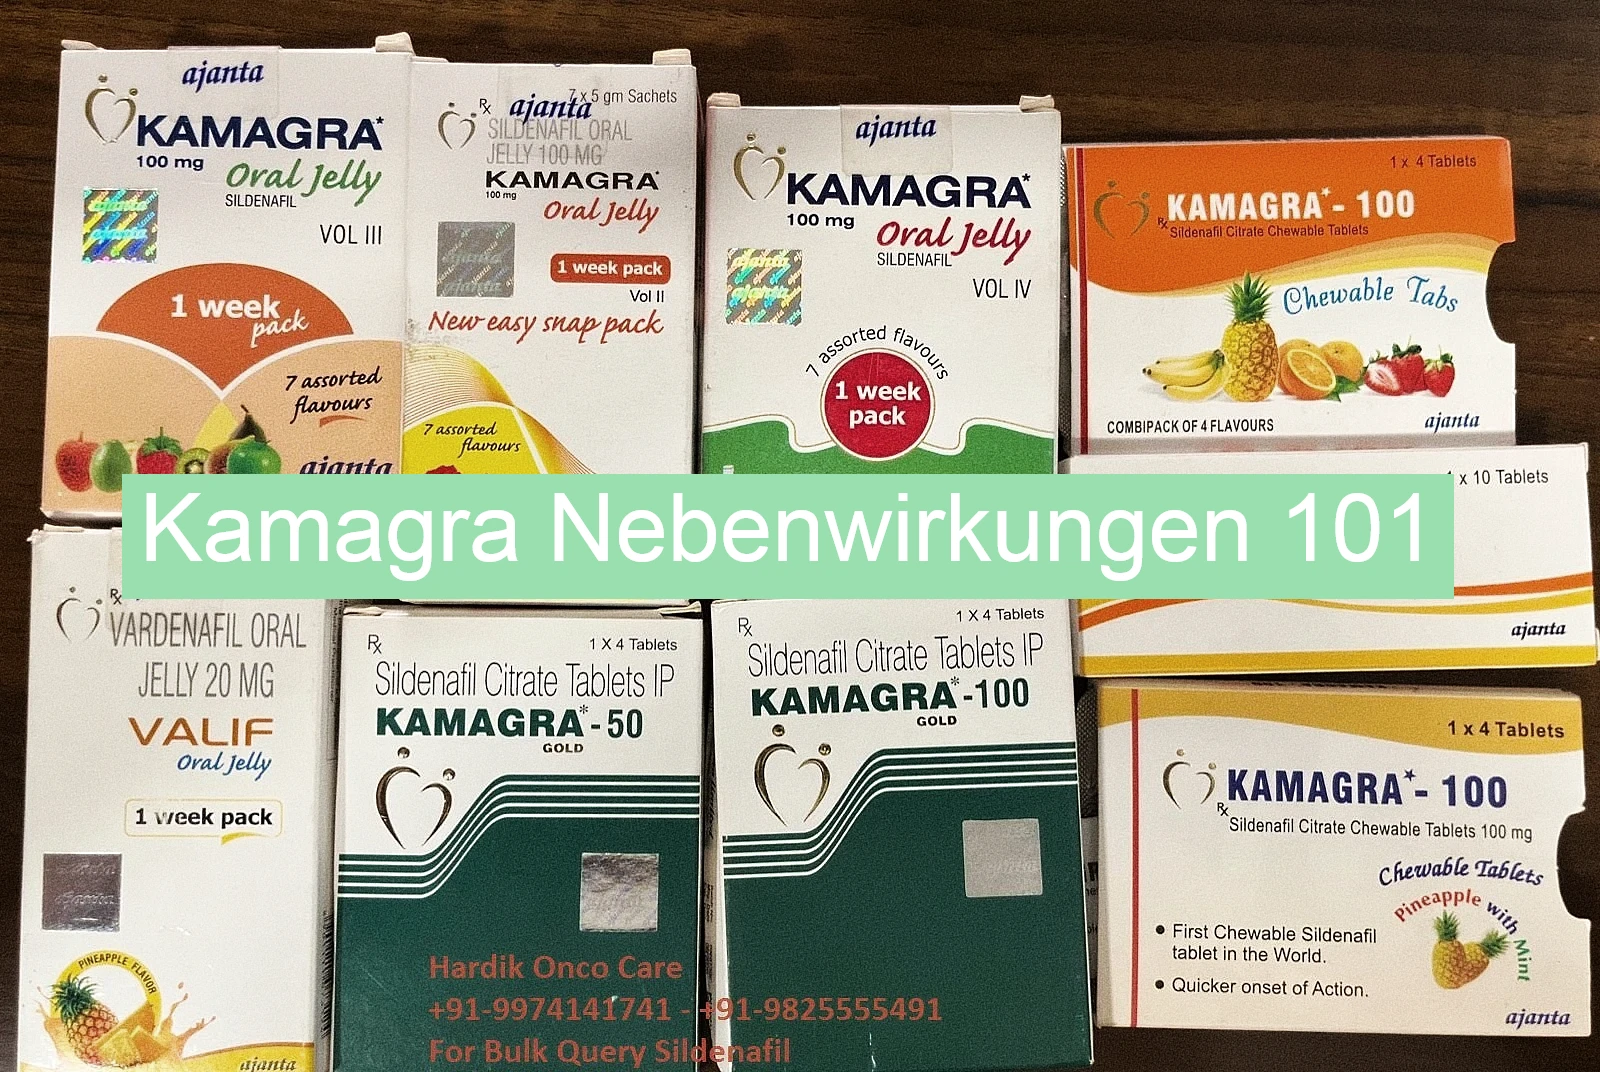 Kamagra Oral Jelly Nebenwirkungen, Super